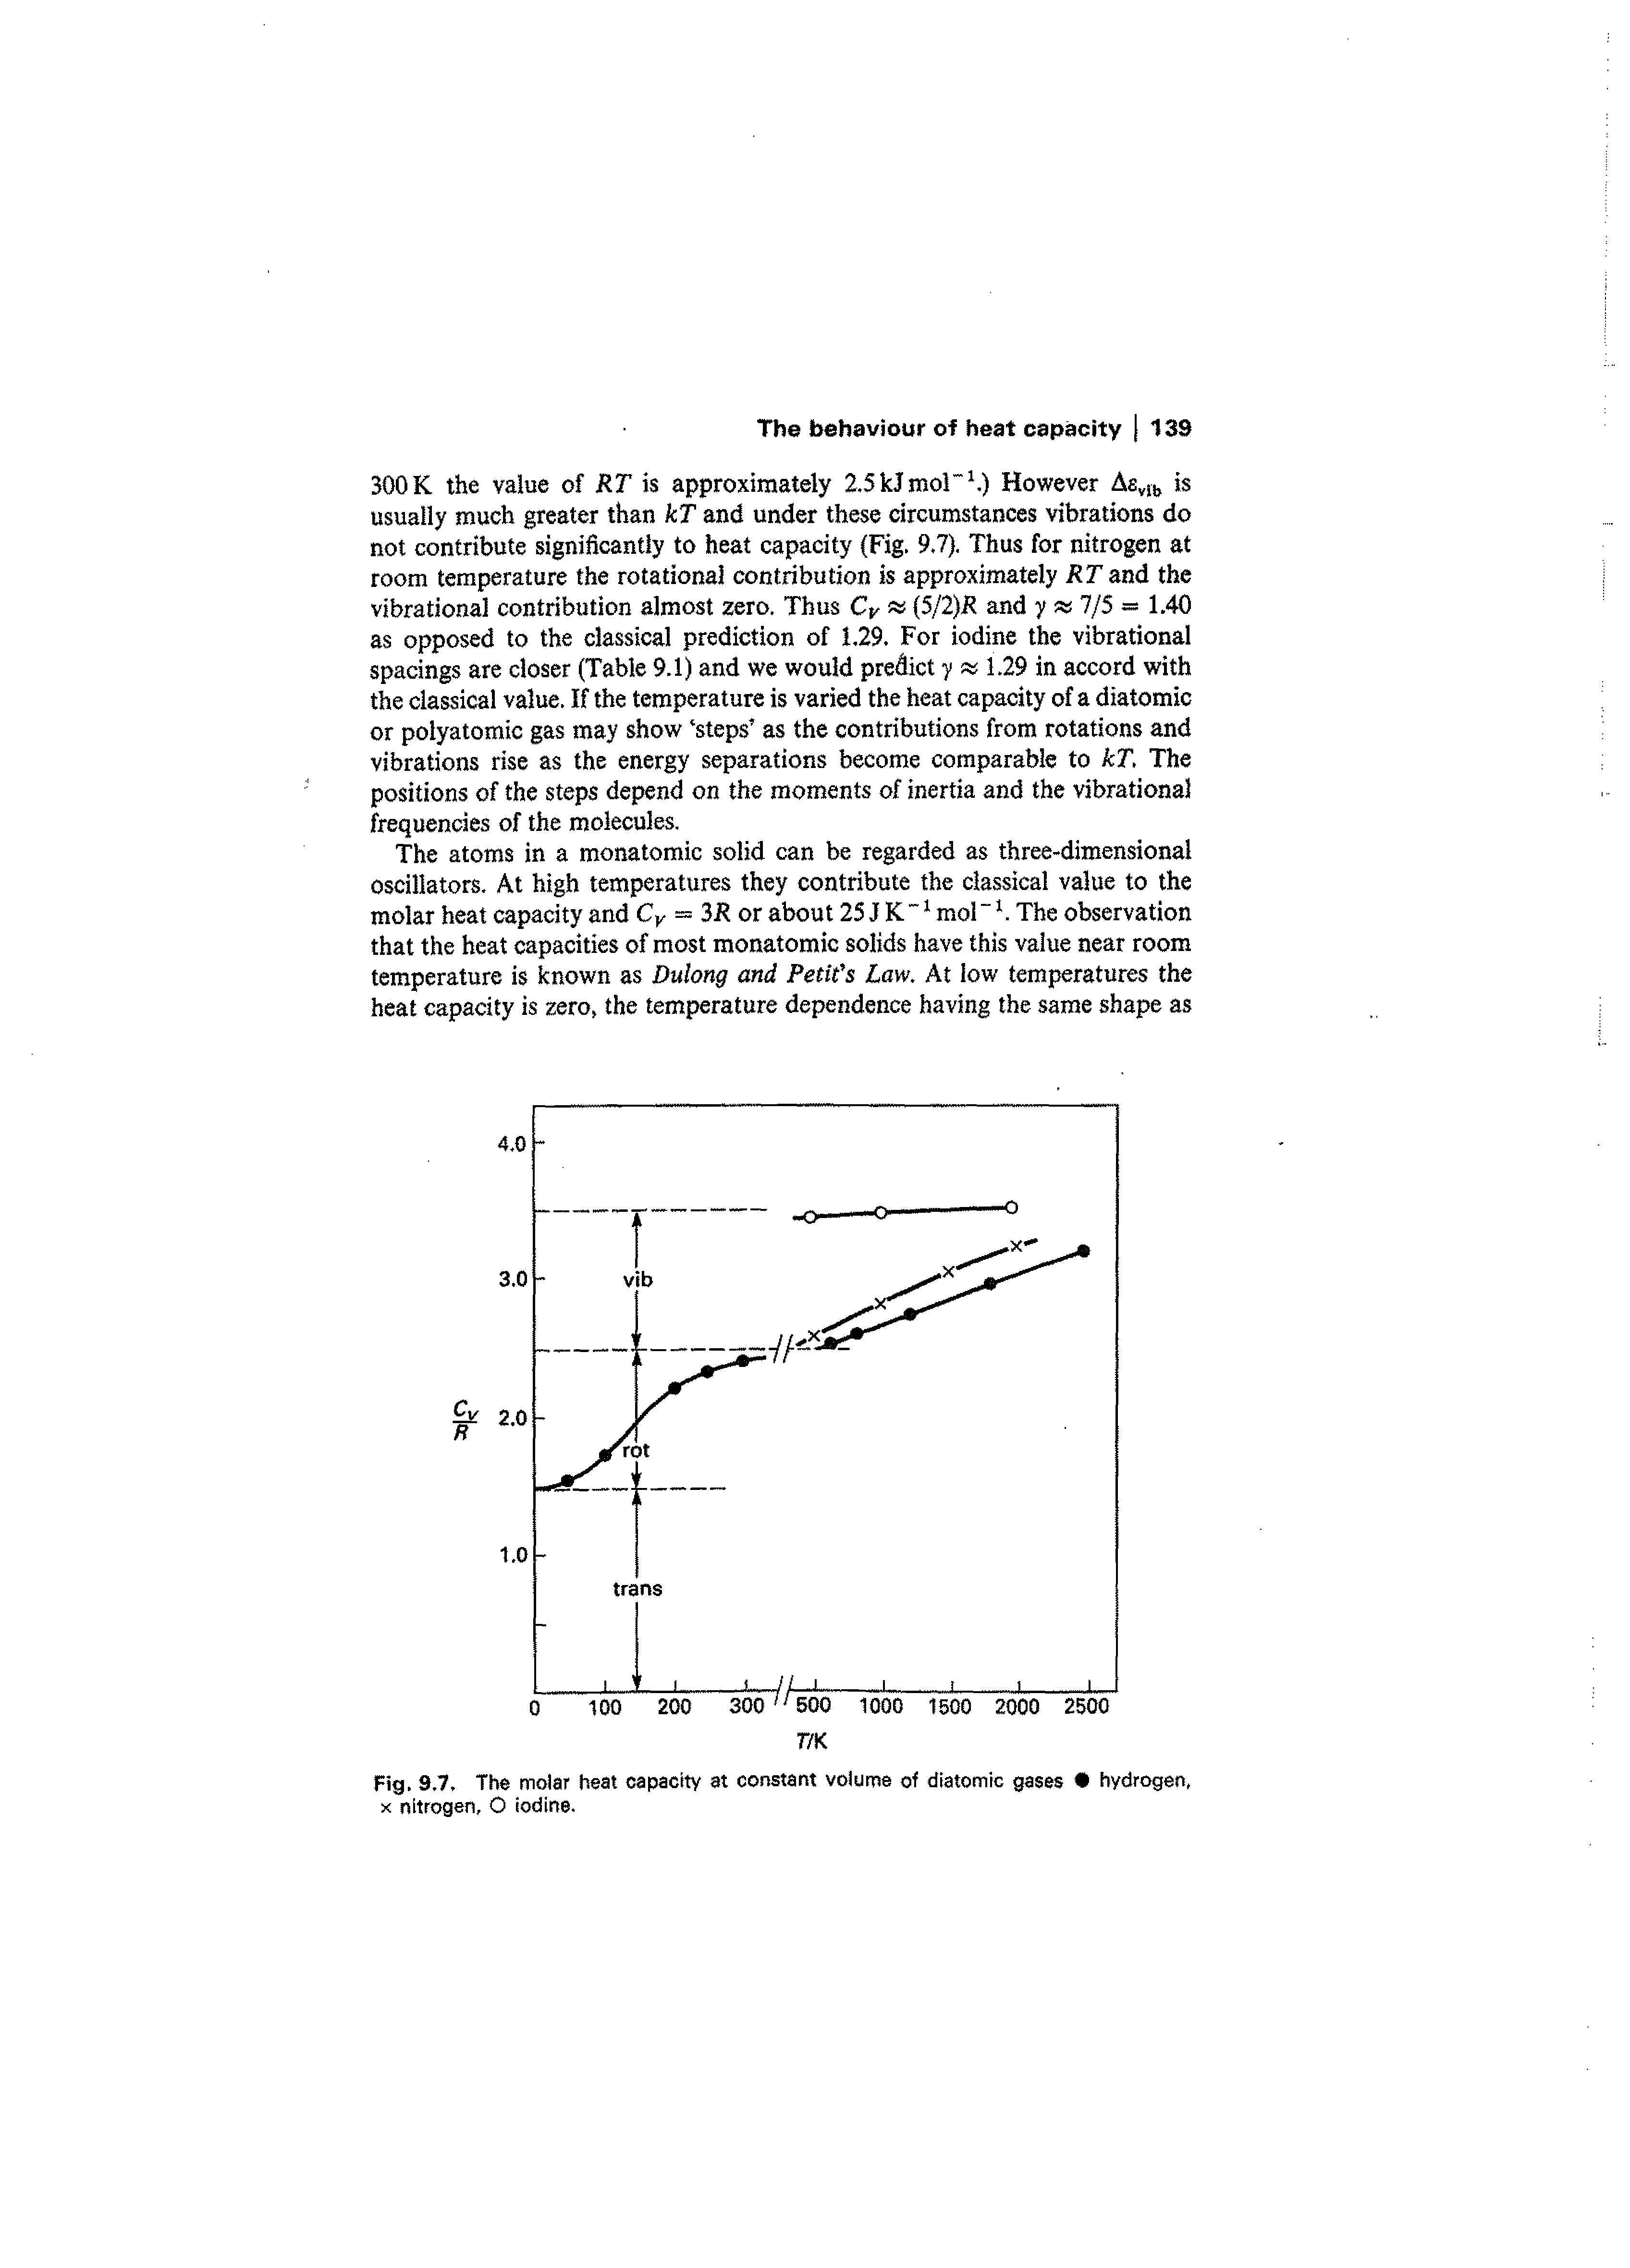 Fig. 9,7, The molar heat capacity at constant volume of diatomic gases hydrogen, x nitrogen, O iodine.